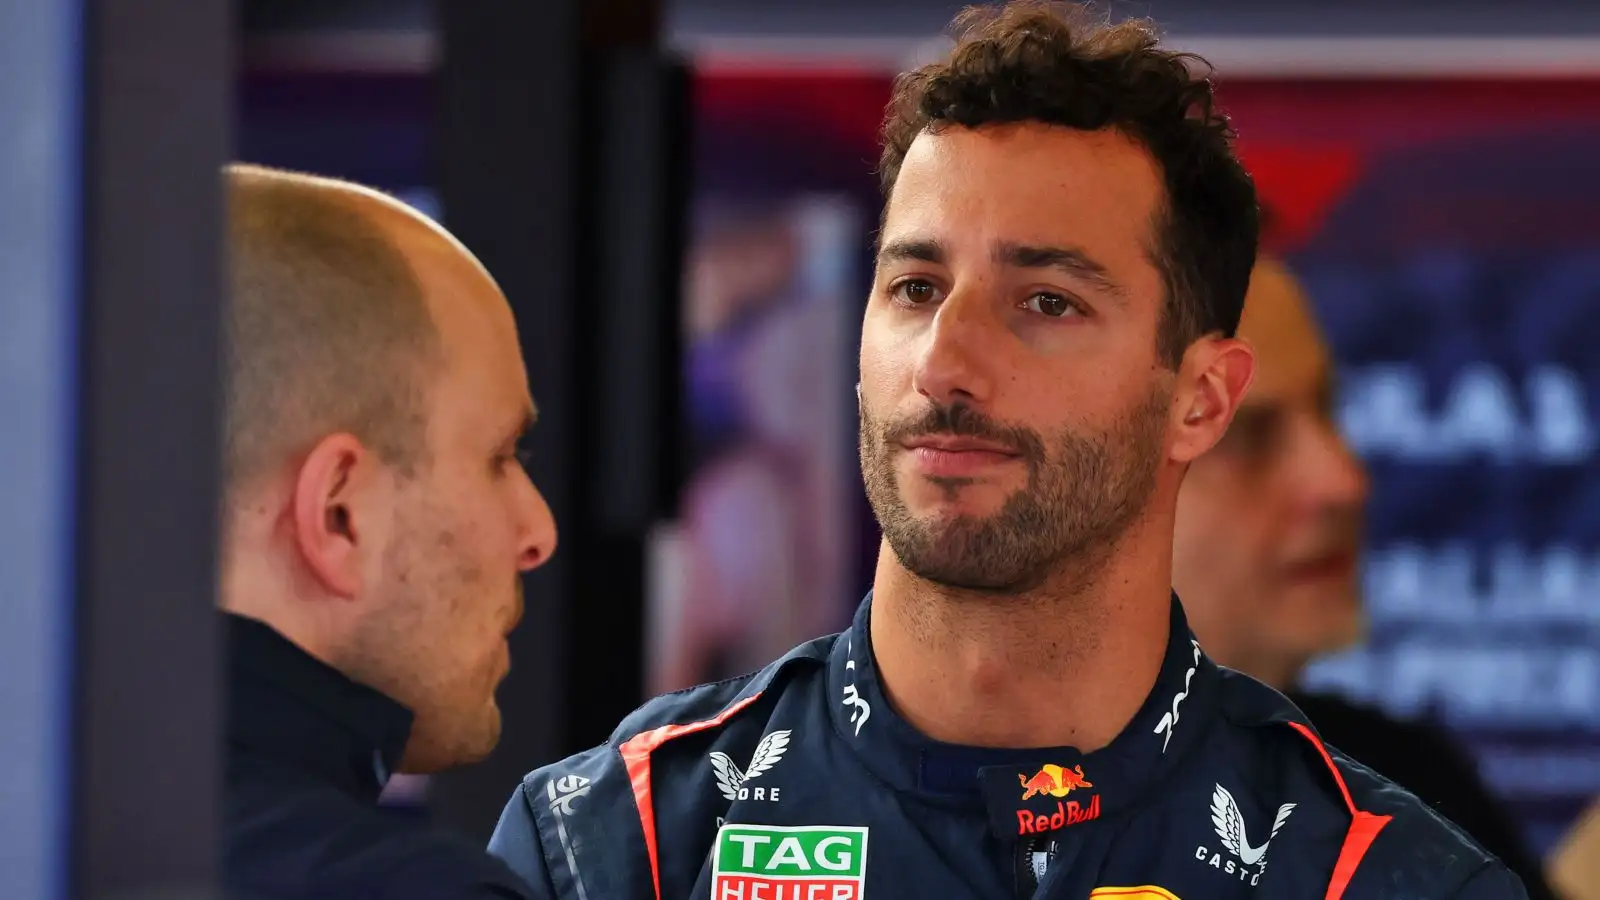 Red Bull reserve driver Daniel Ricciardo